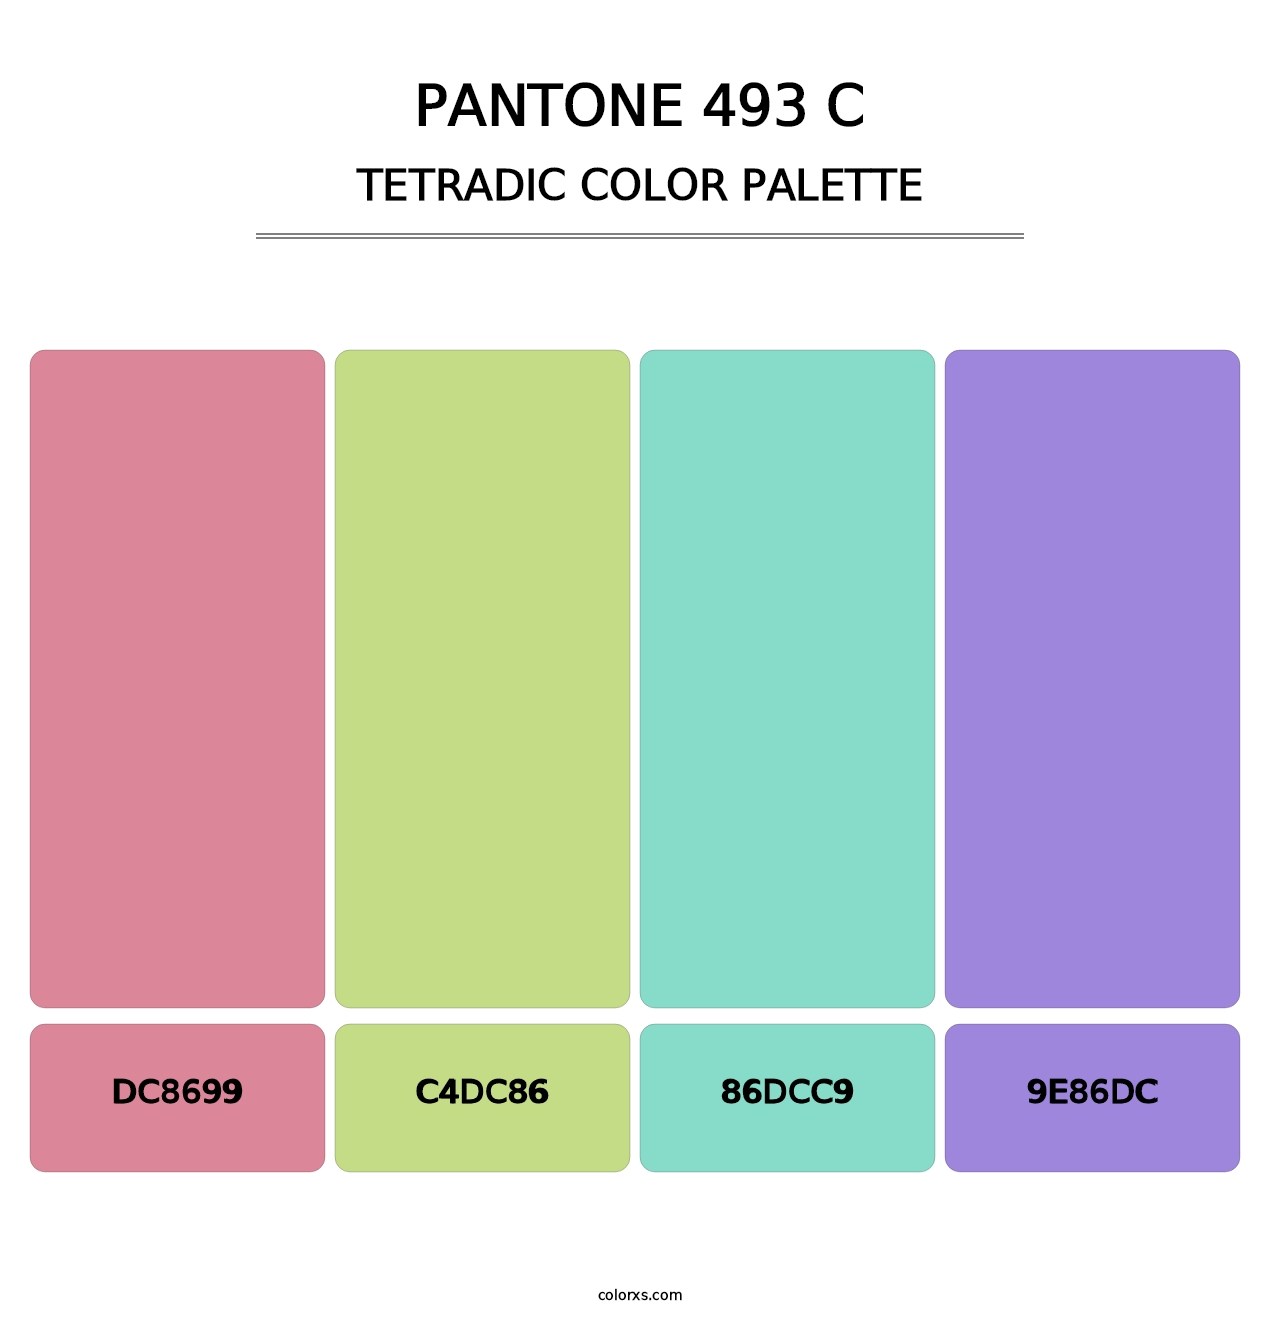 PANTONE 493 C - Tetradic Color Palette